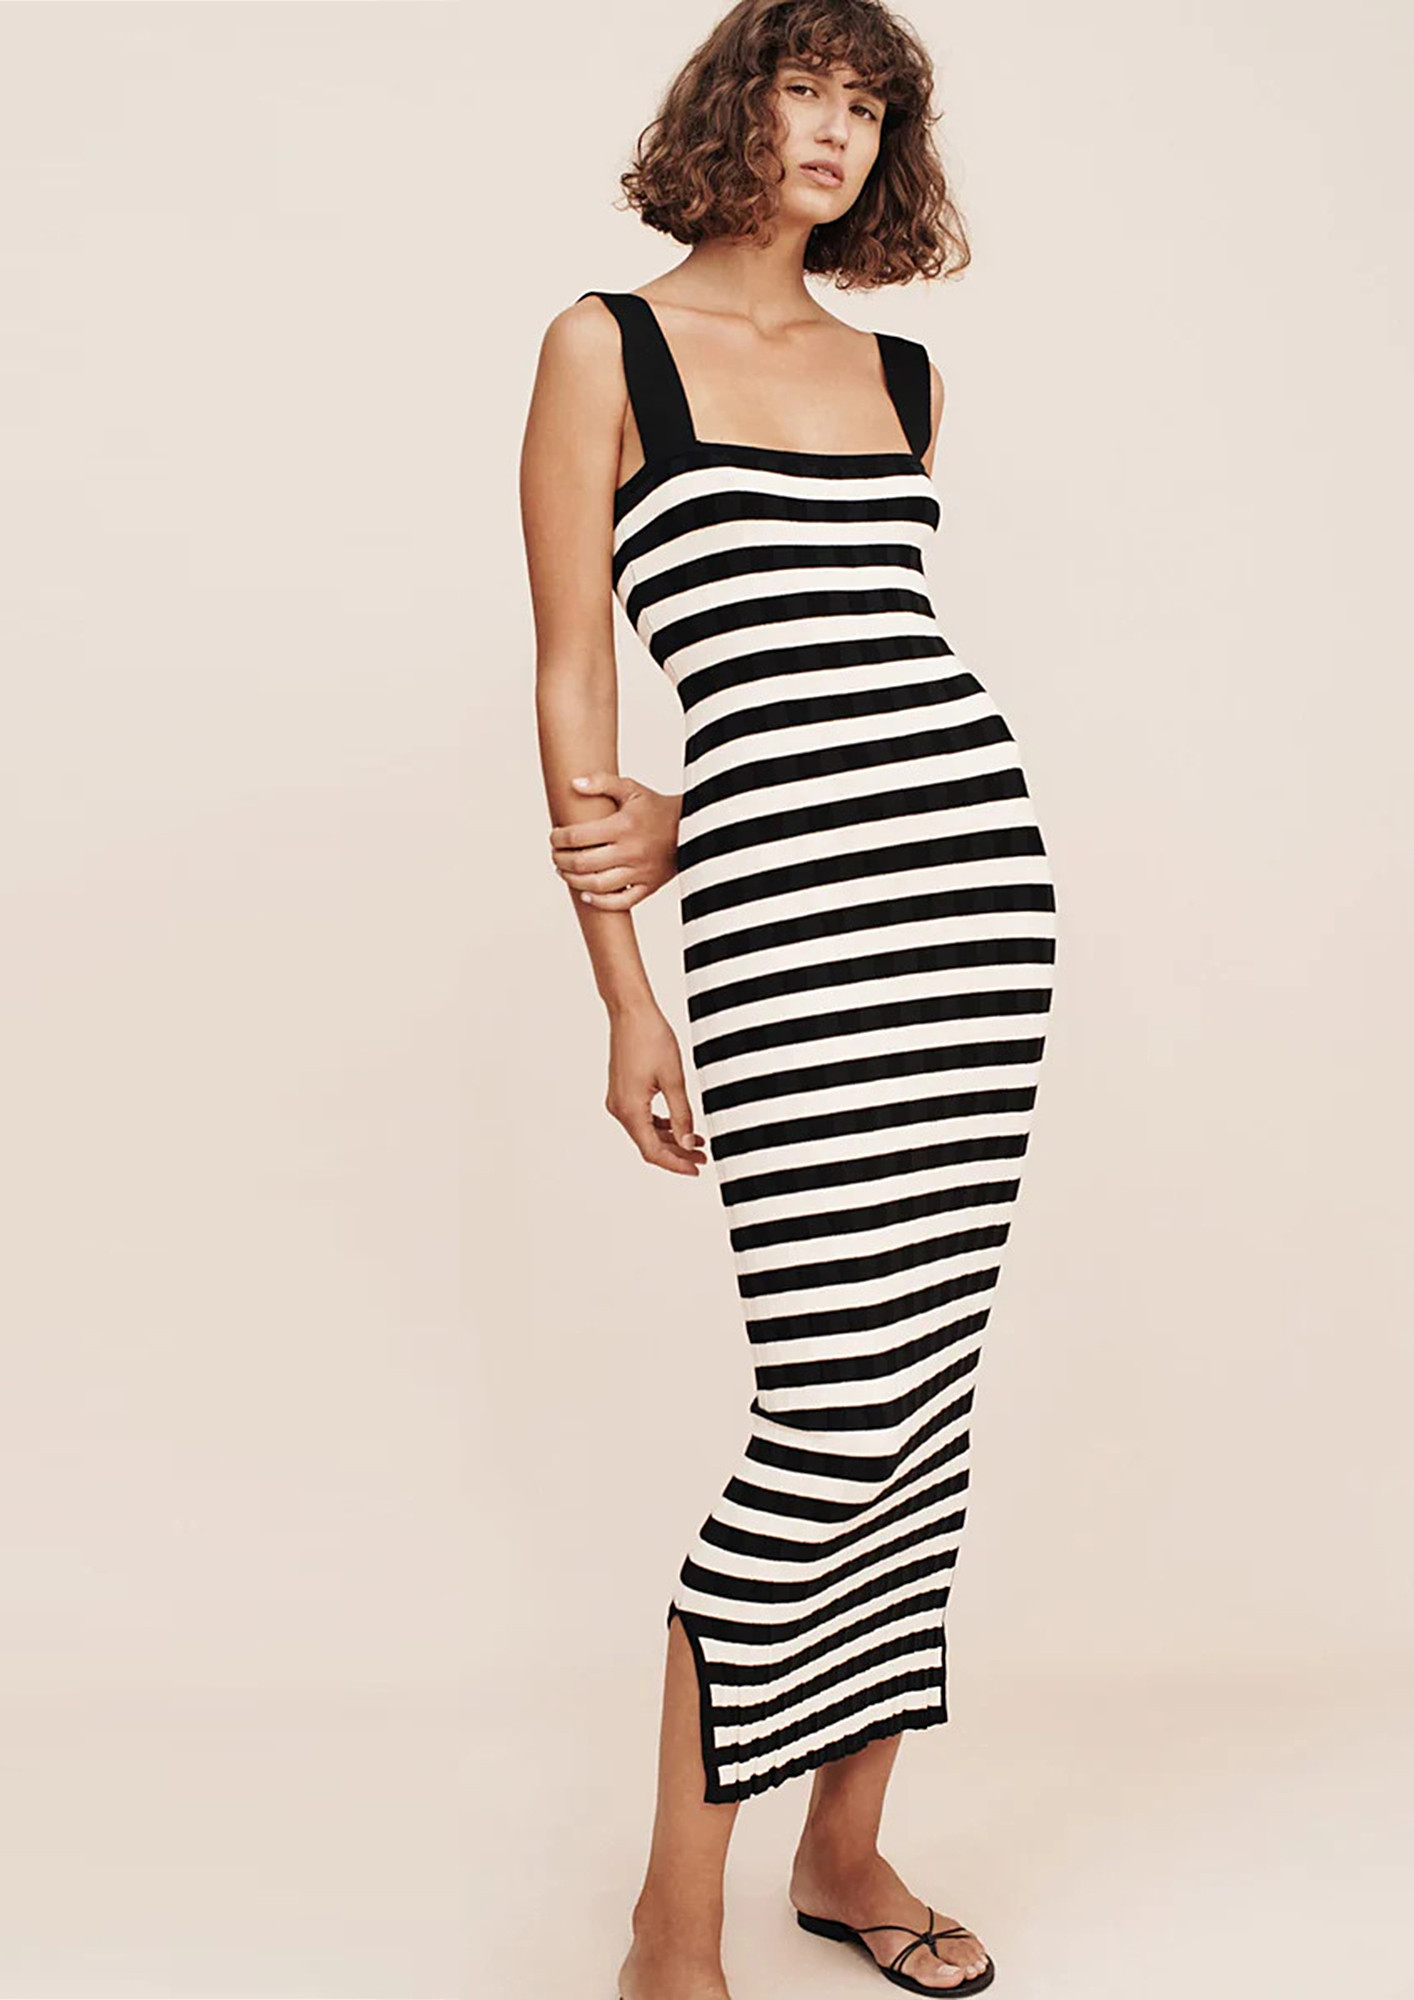 Black and white Formal Gowns - Darius Cordell Fashion Ltd